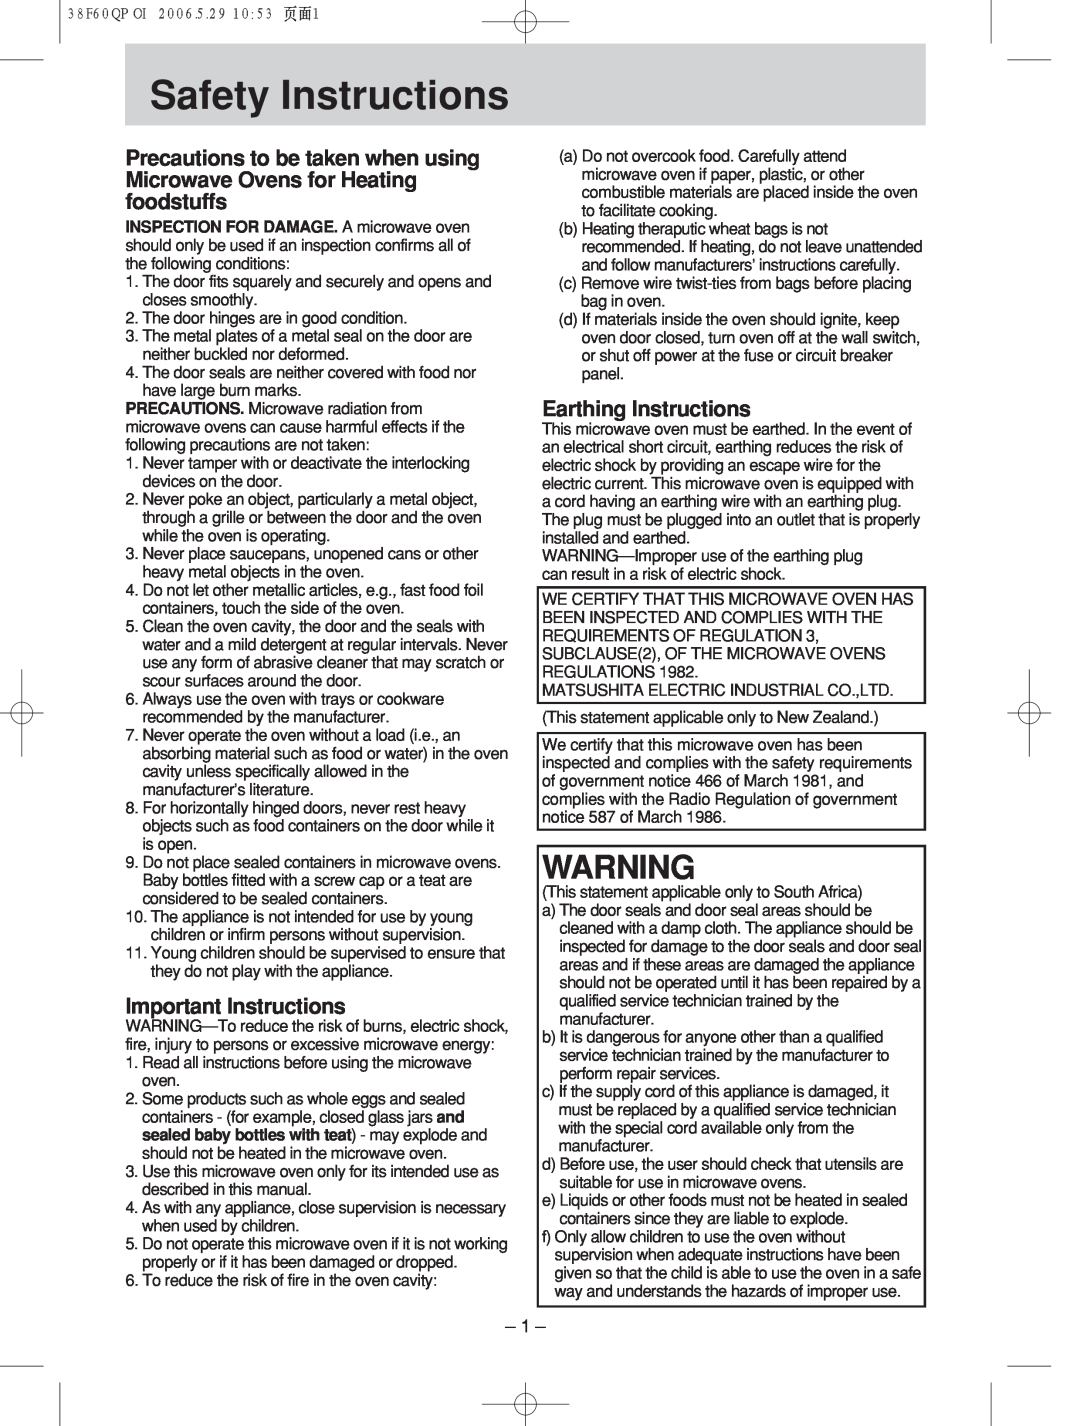 Panasonic nn-sd686s manual Safety!!!!! !Instructions, Important Instructions, Earthing Instructions 